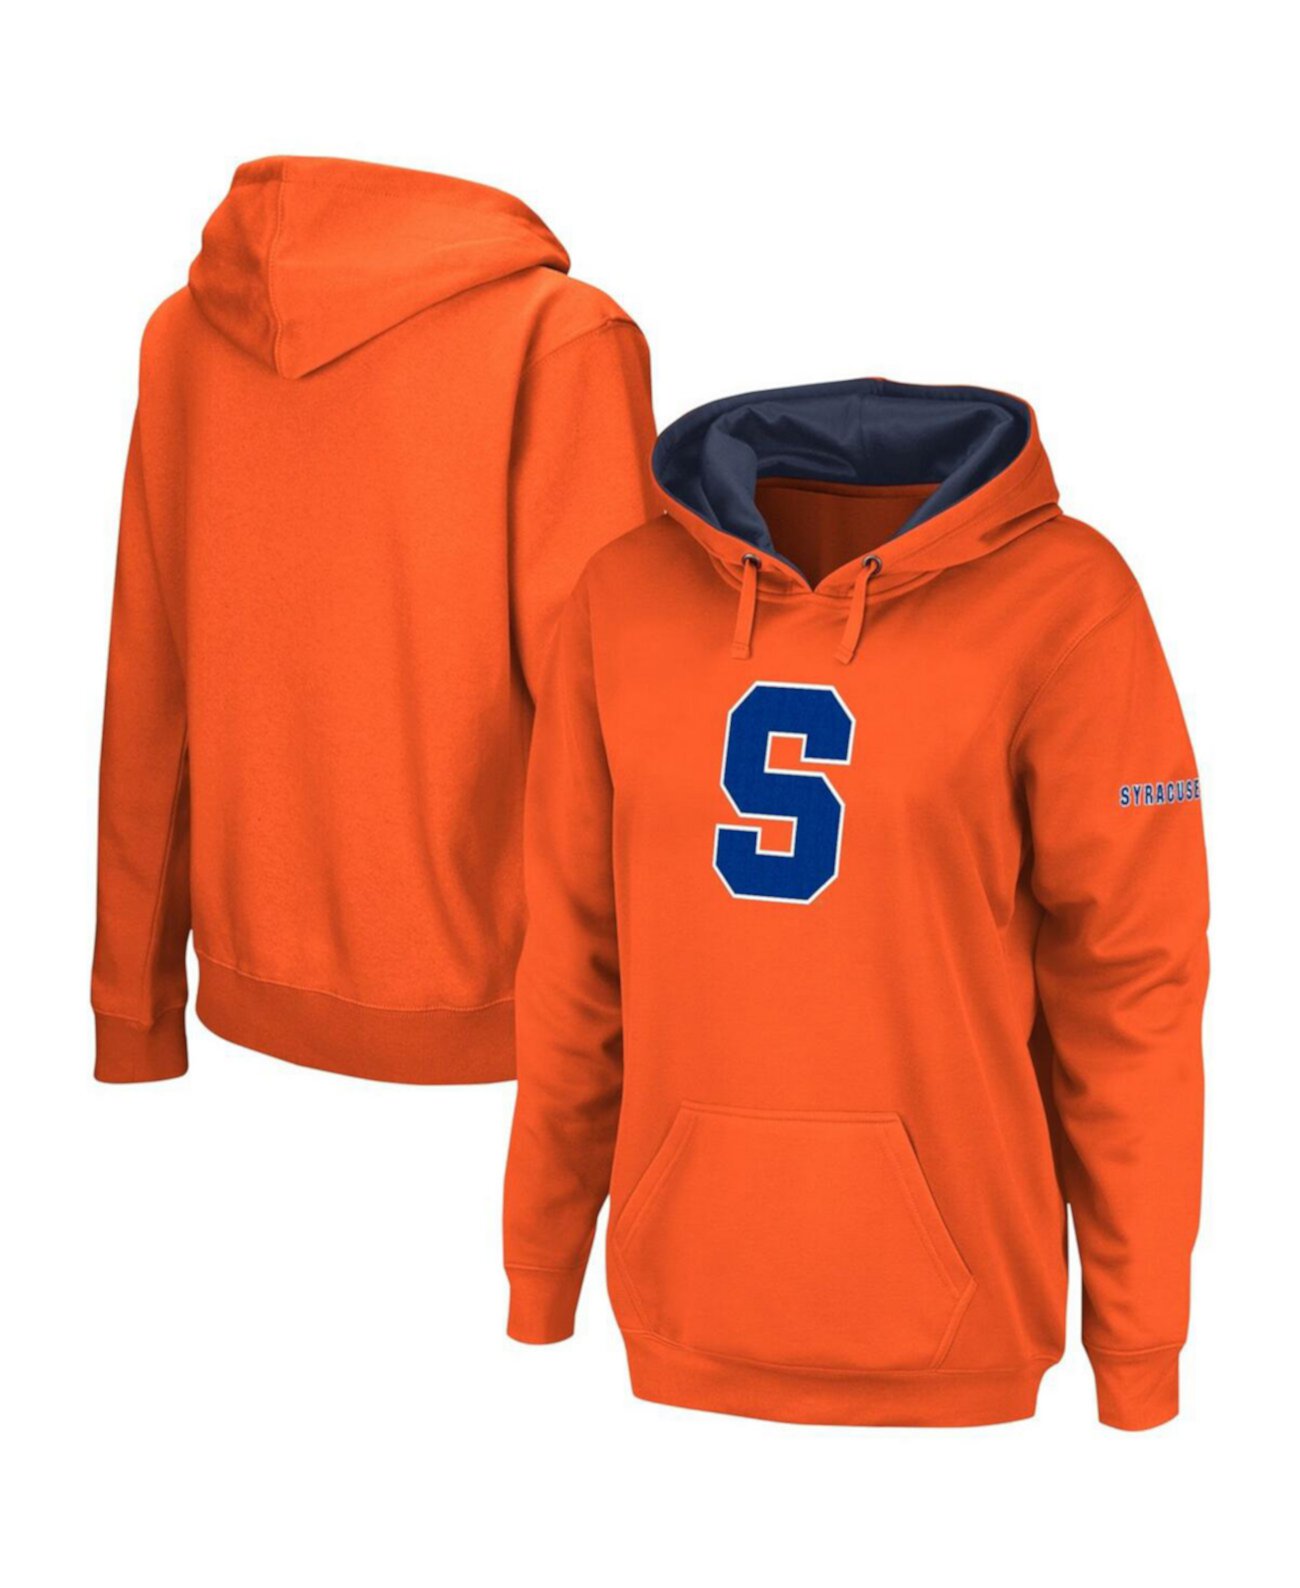 Женский пуловер с капюшоном и большим логотипом Orange Syracuse Orange Colosseum